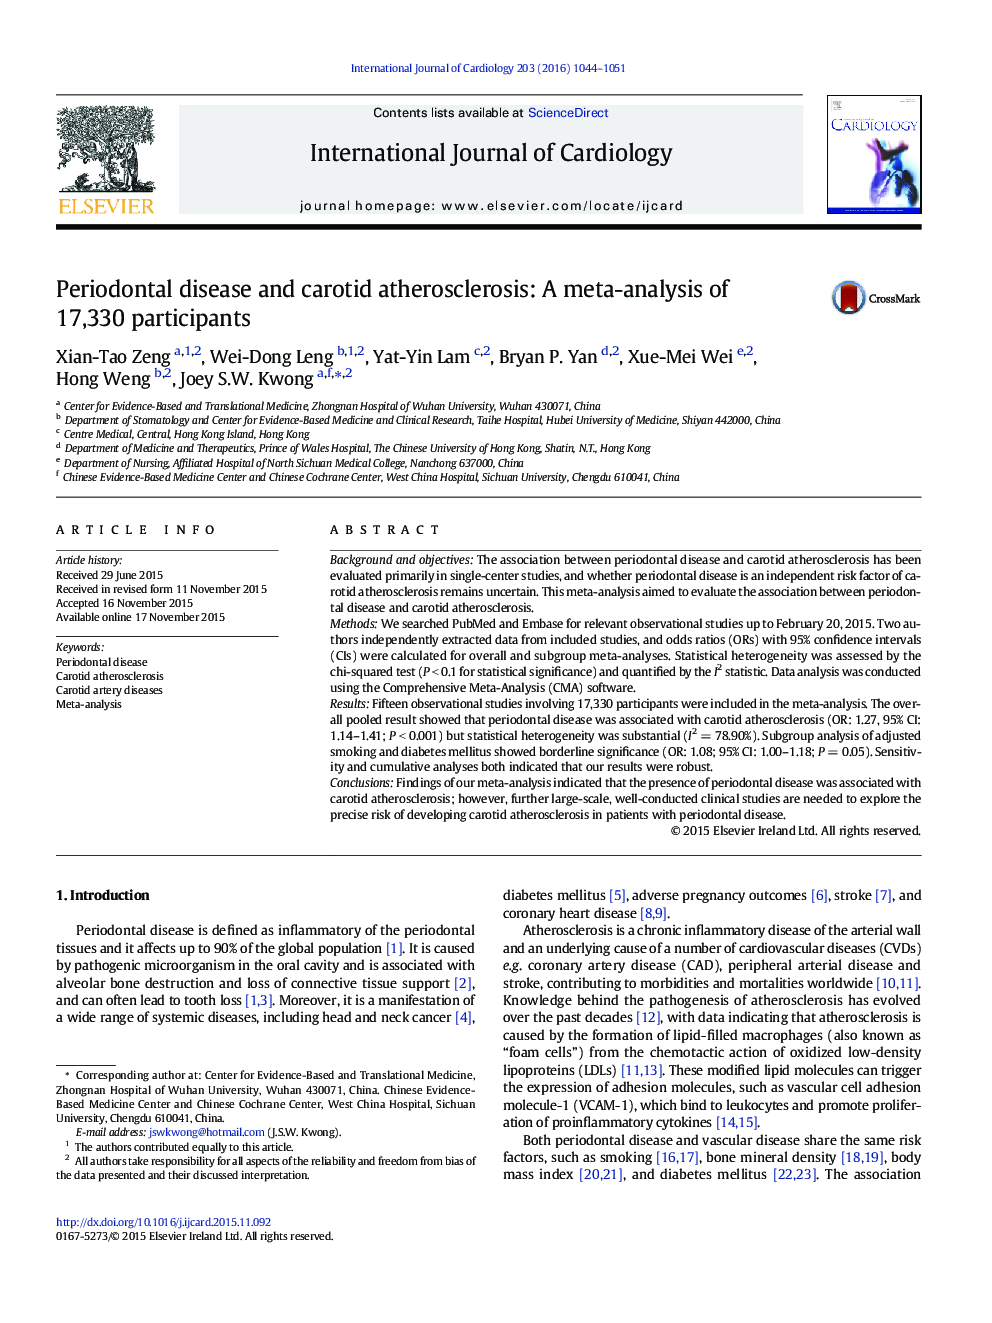 Periodontal disease and carotid atherosclerosis: A meta-analysis of 17,330 participants